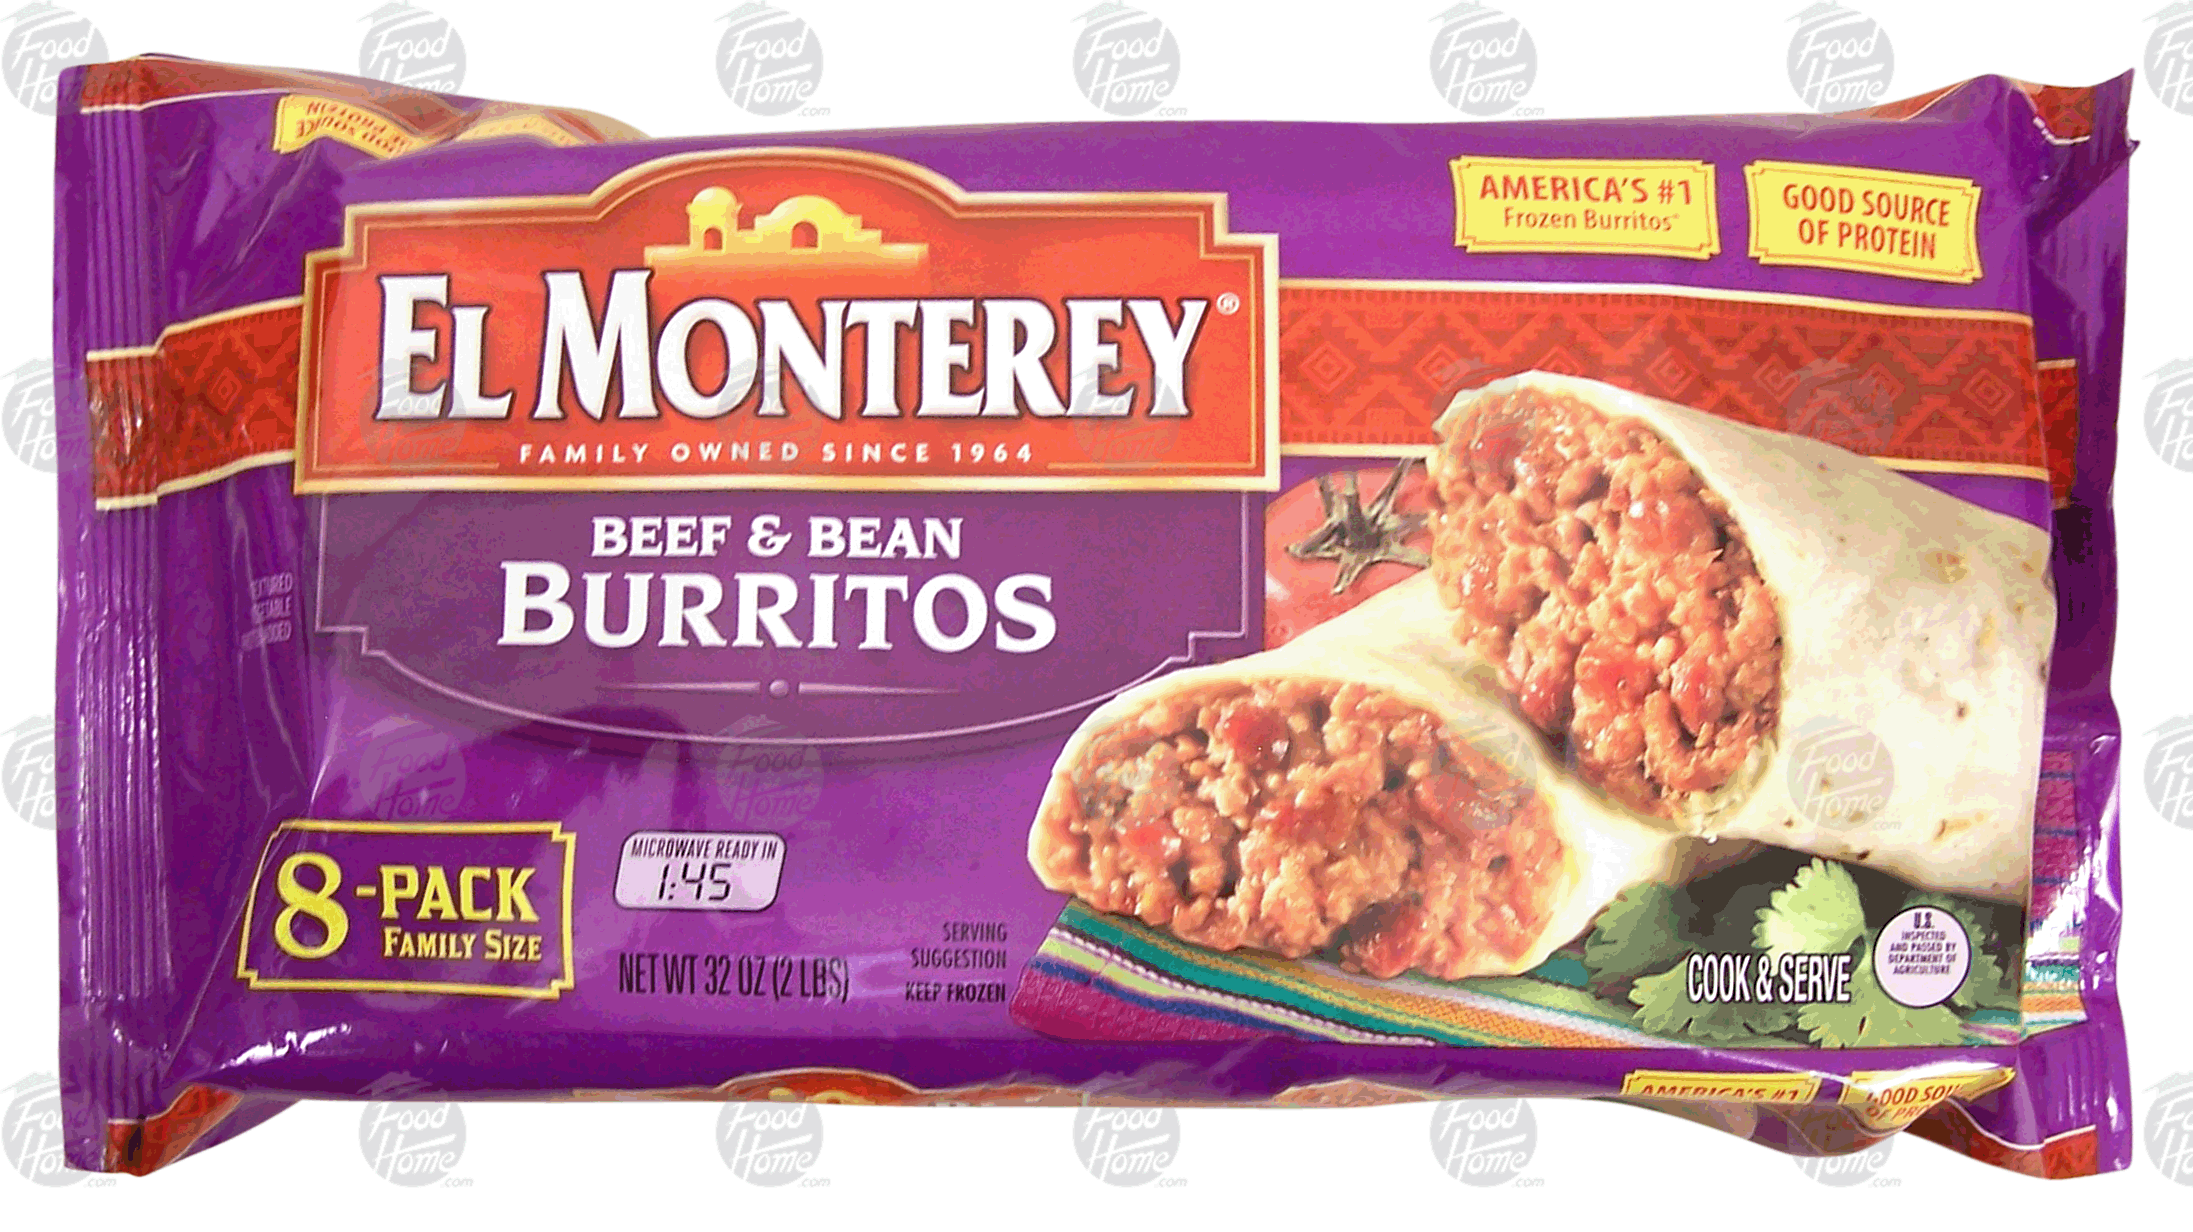 El Monterey  beef & bean burritos, 8 pack Full-Size Picture